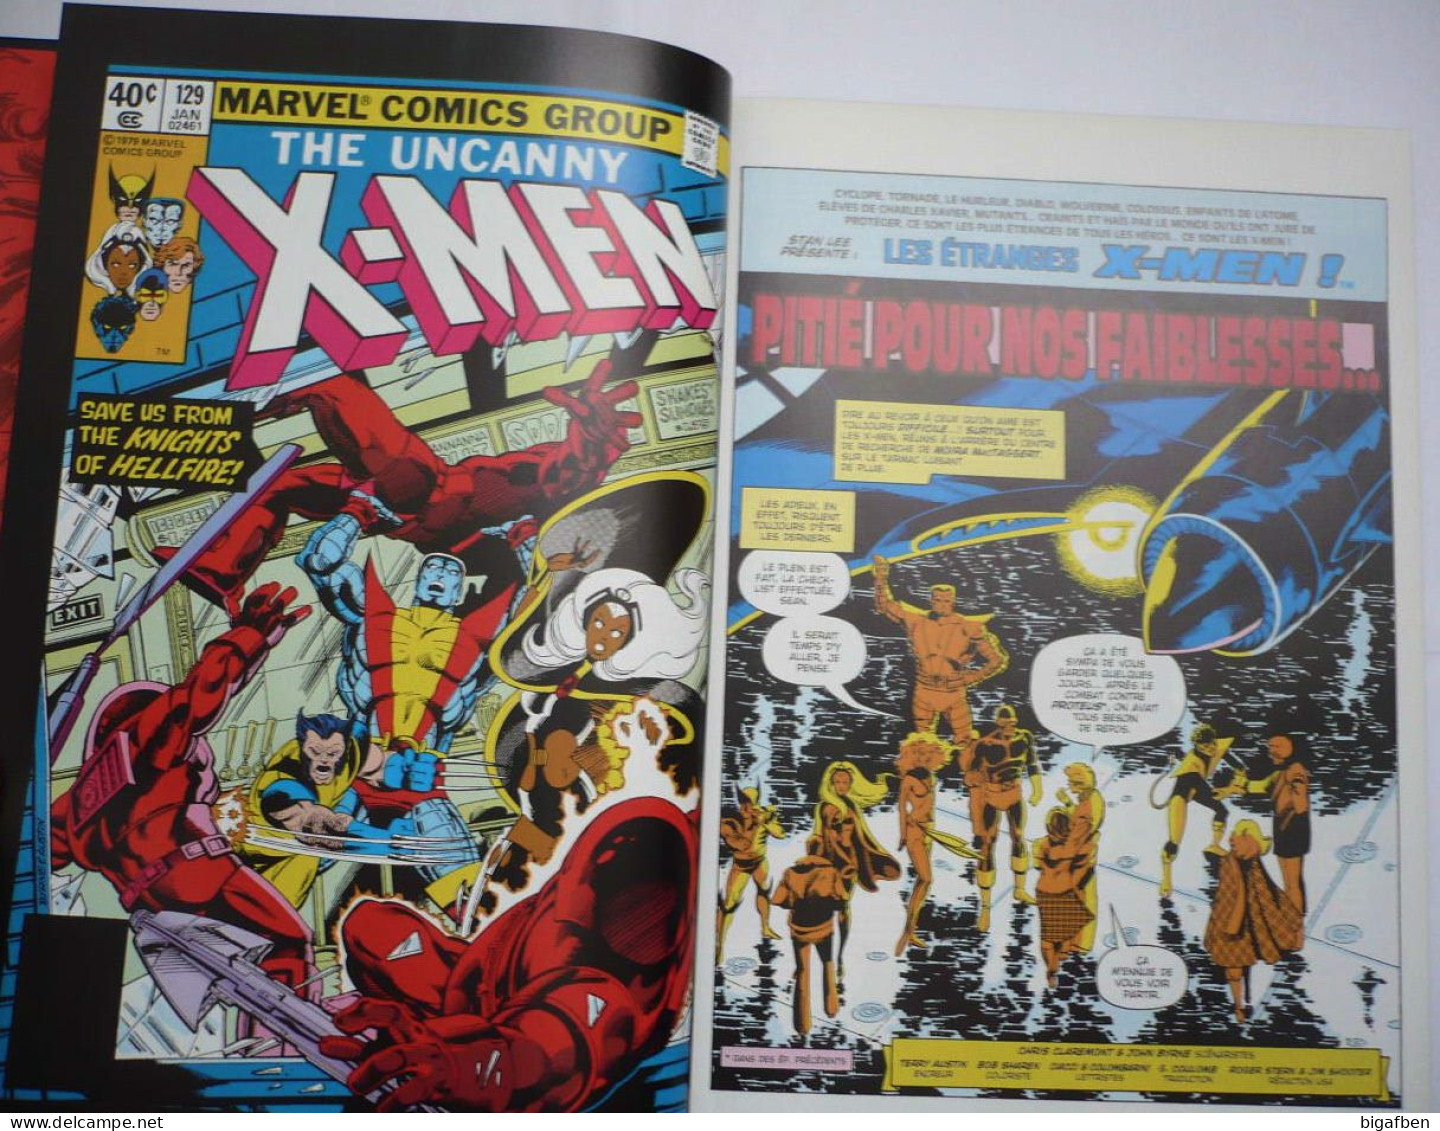 Lot 2 MARVEL Comics SPIDER-MAN, X-MEN / TBE NEUF +++ - Wholesale, Bulk Lots